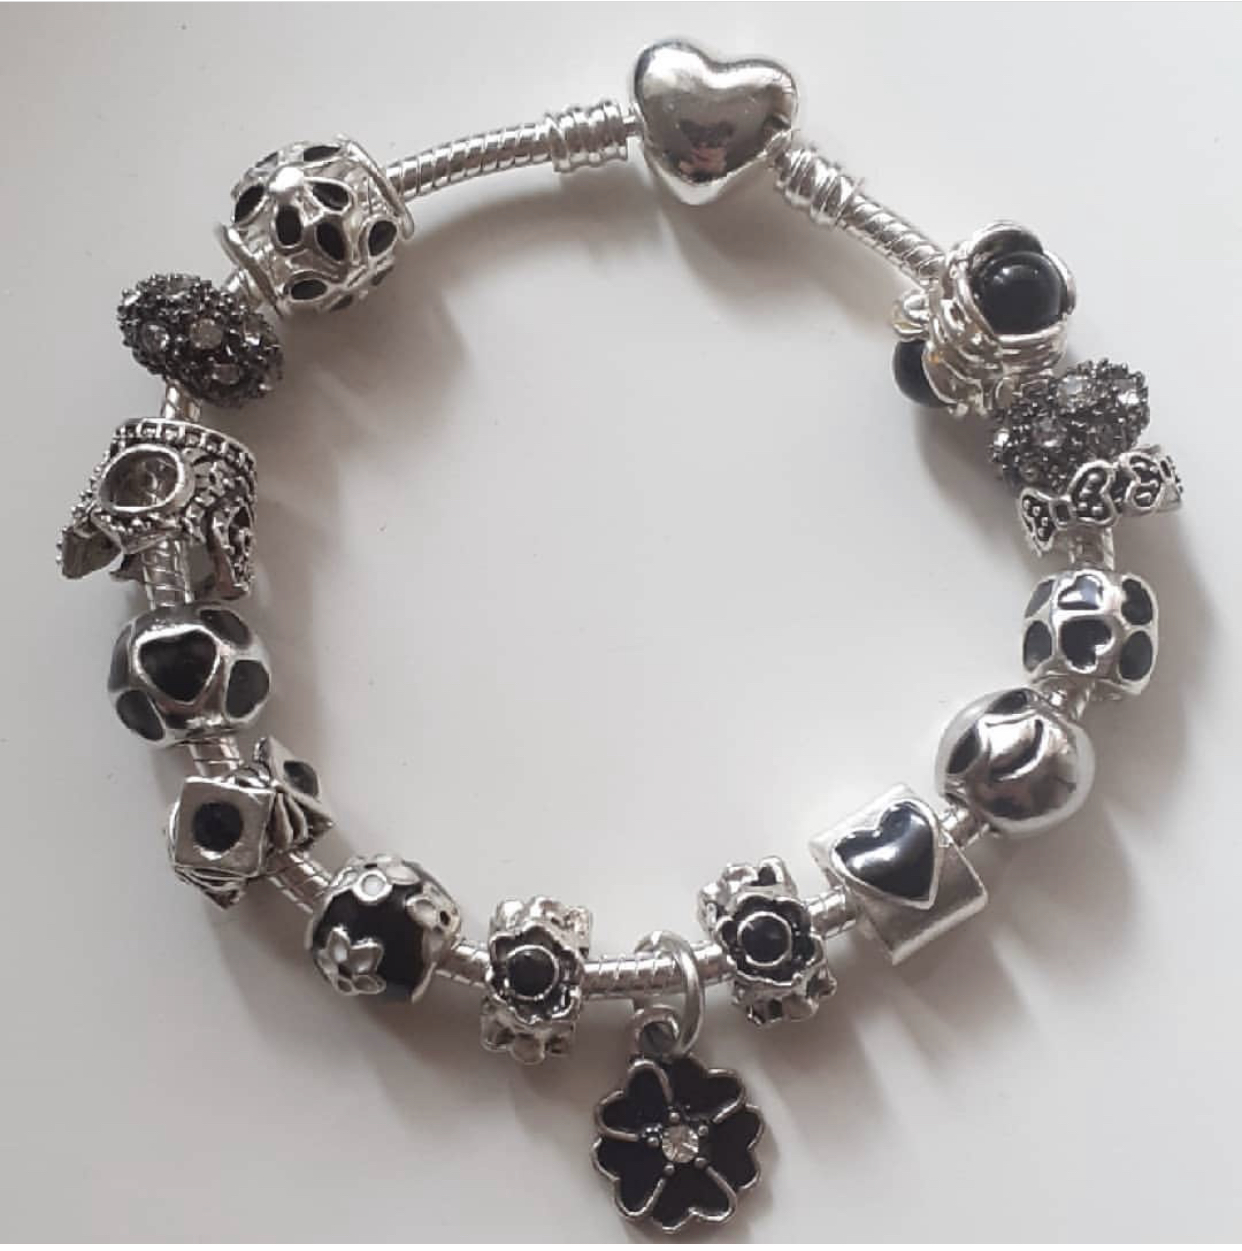 Pandora Bracelet, Pandora Charm, Charm Bracelet Like Pandora, Pandora Style, Gift For Her, Charm Bracelet,black Pendant,heart,flowers,crown